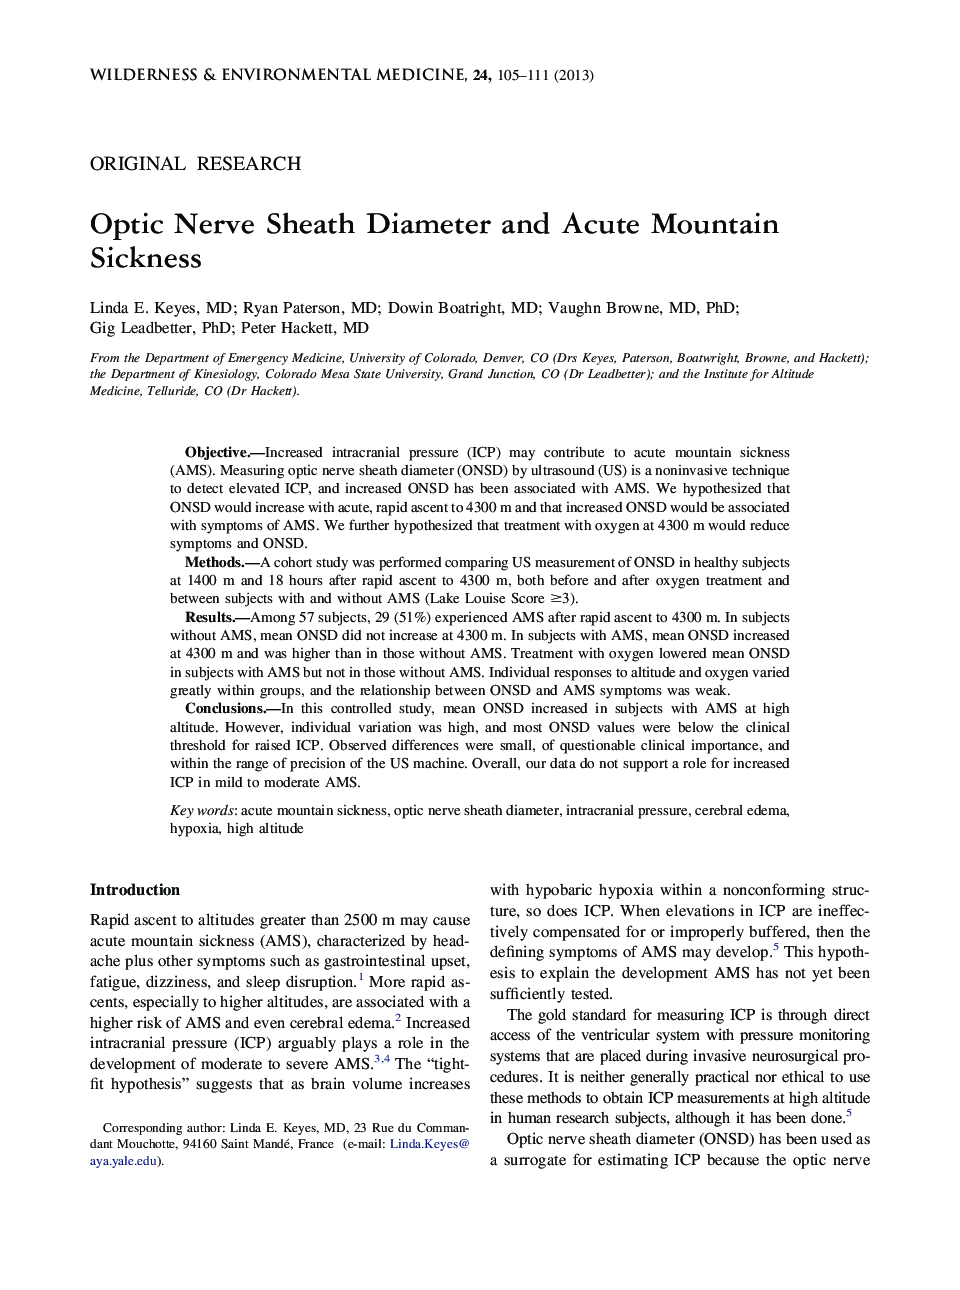 Optic Nerve Sheath Diameter and Acute Mountain Sickness